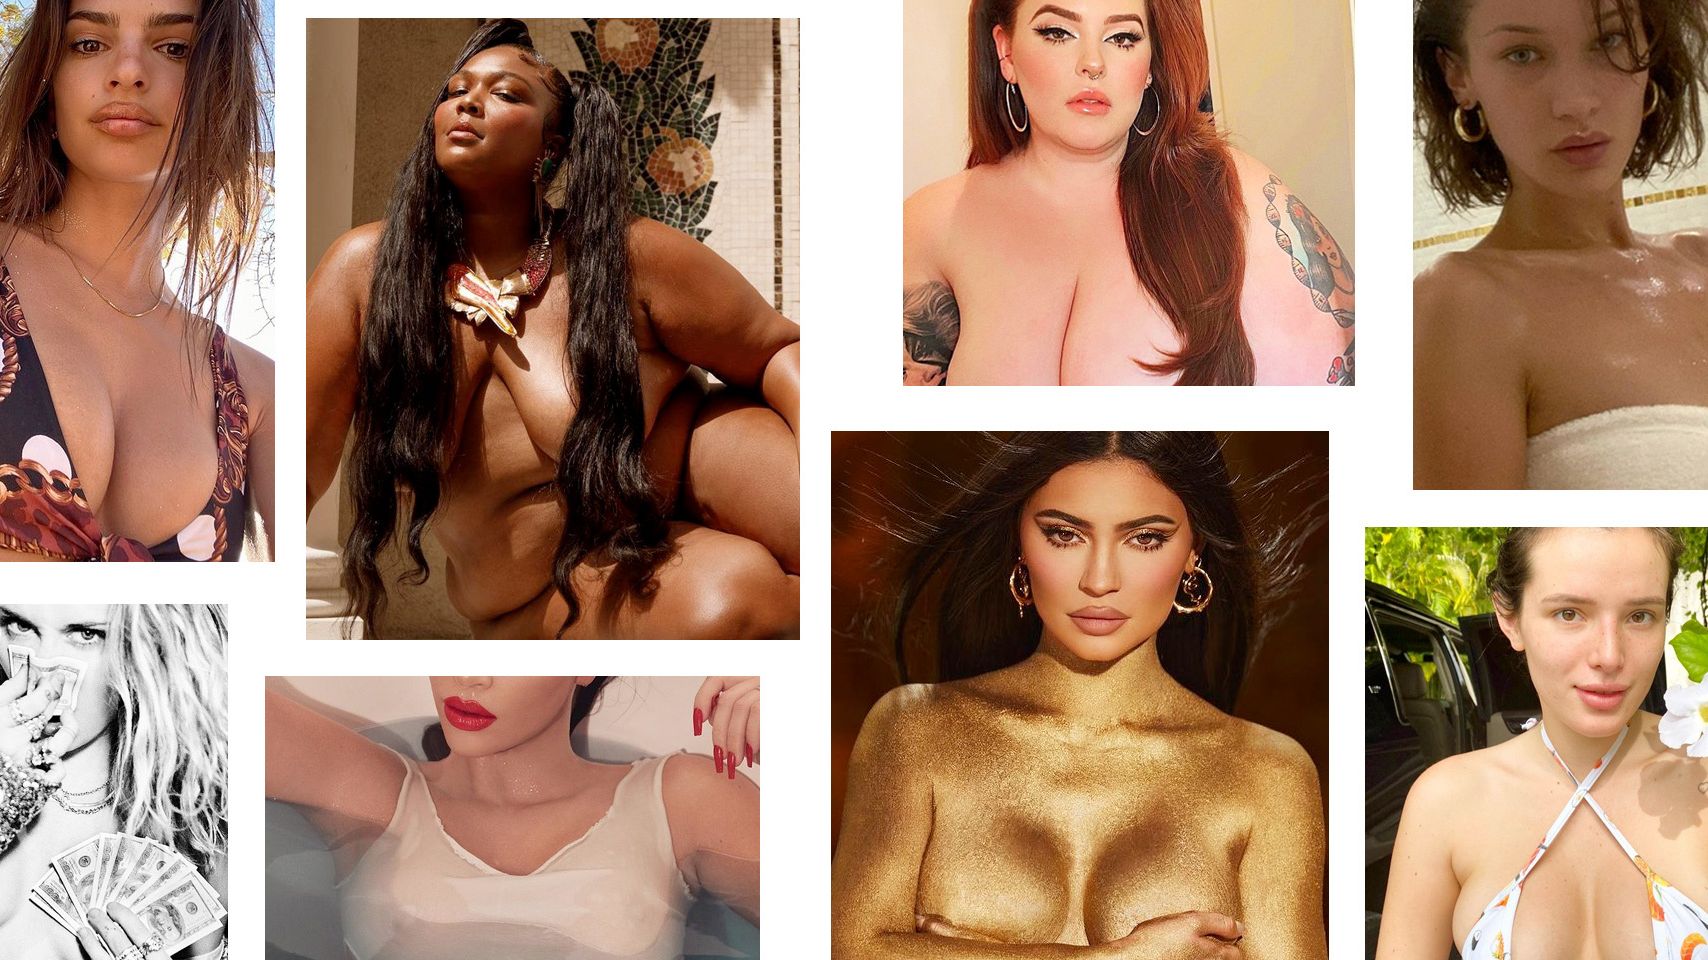 bethany heinrichs share girls who show their boobs photos